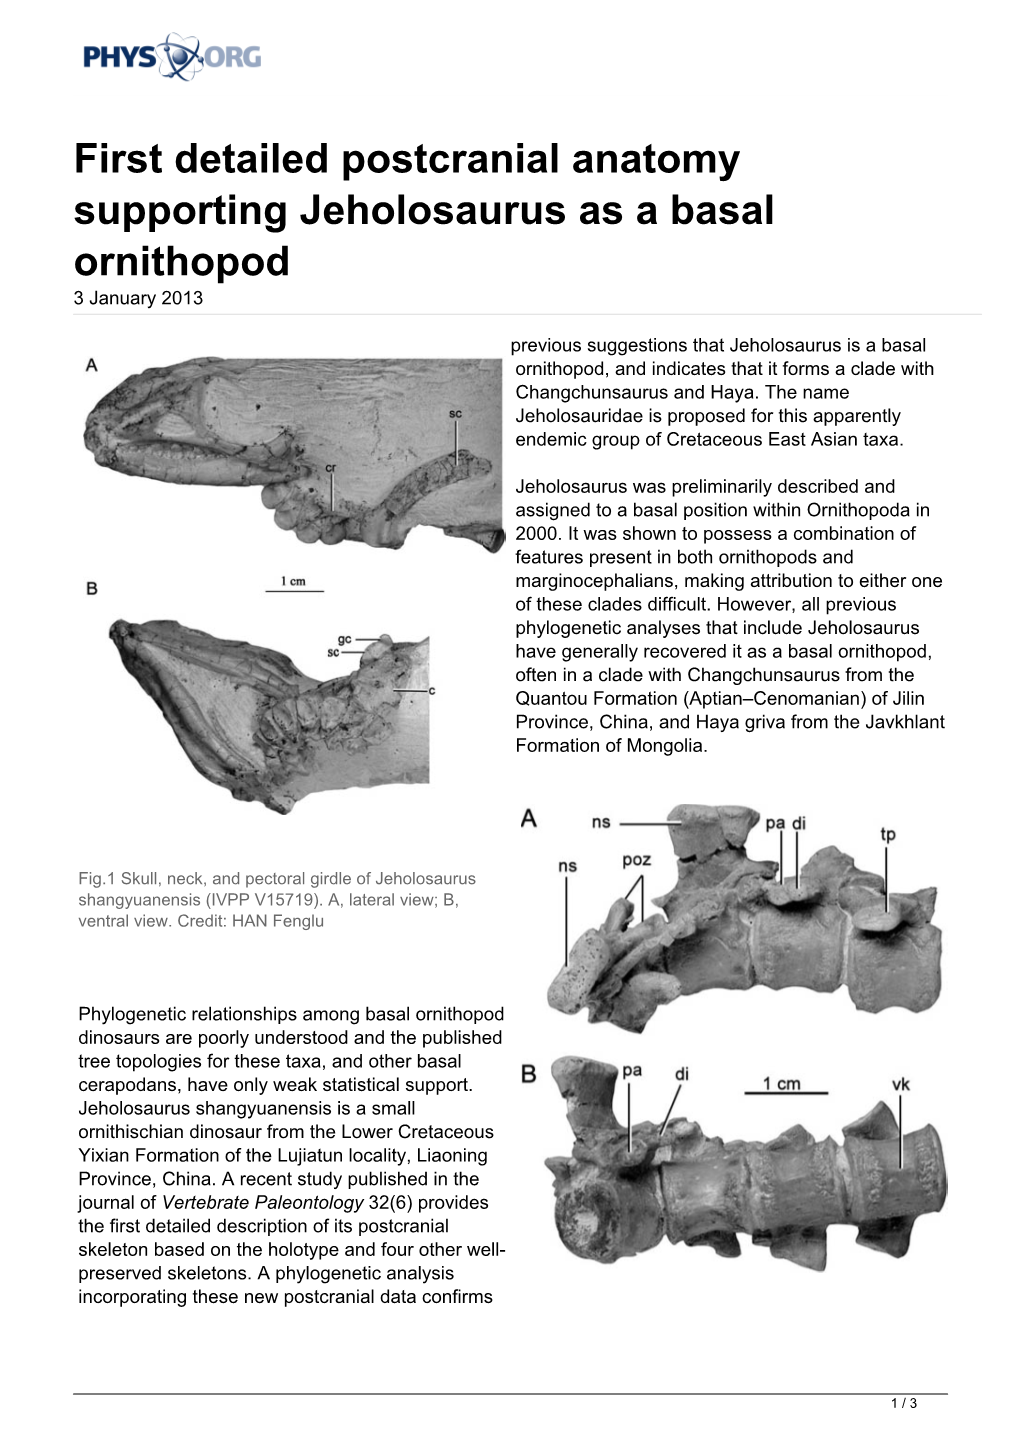 First Detailed Postcranial Anatomy Supporting Jeholosaurus As a Basal Ornithopod 3 January 2013